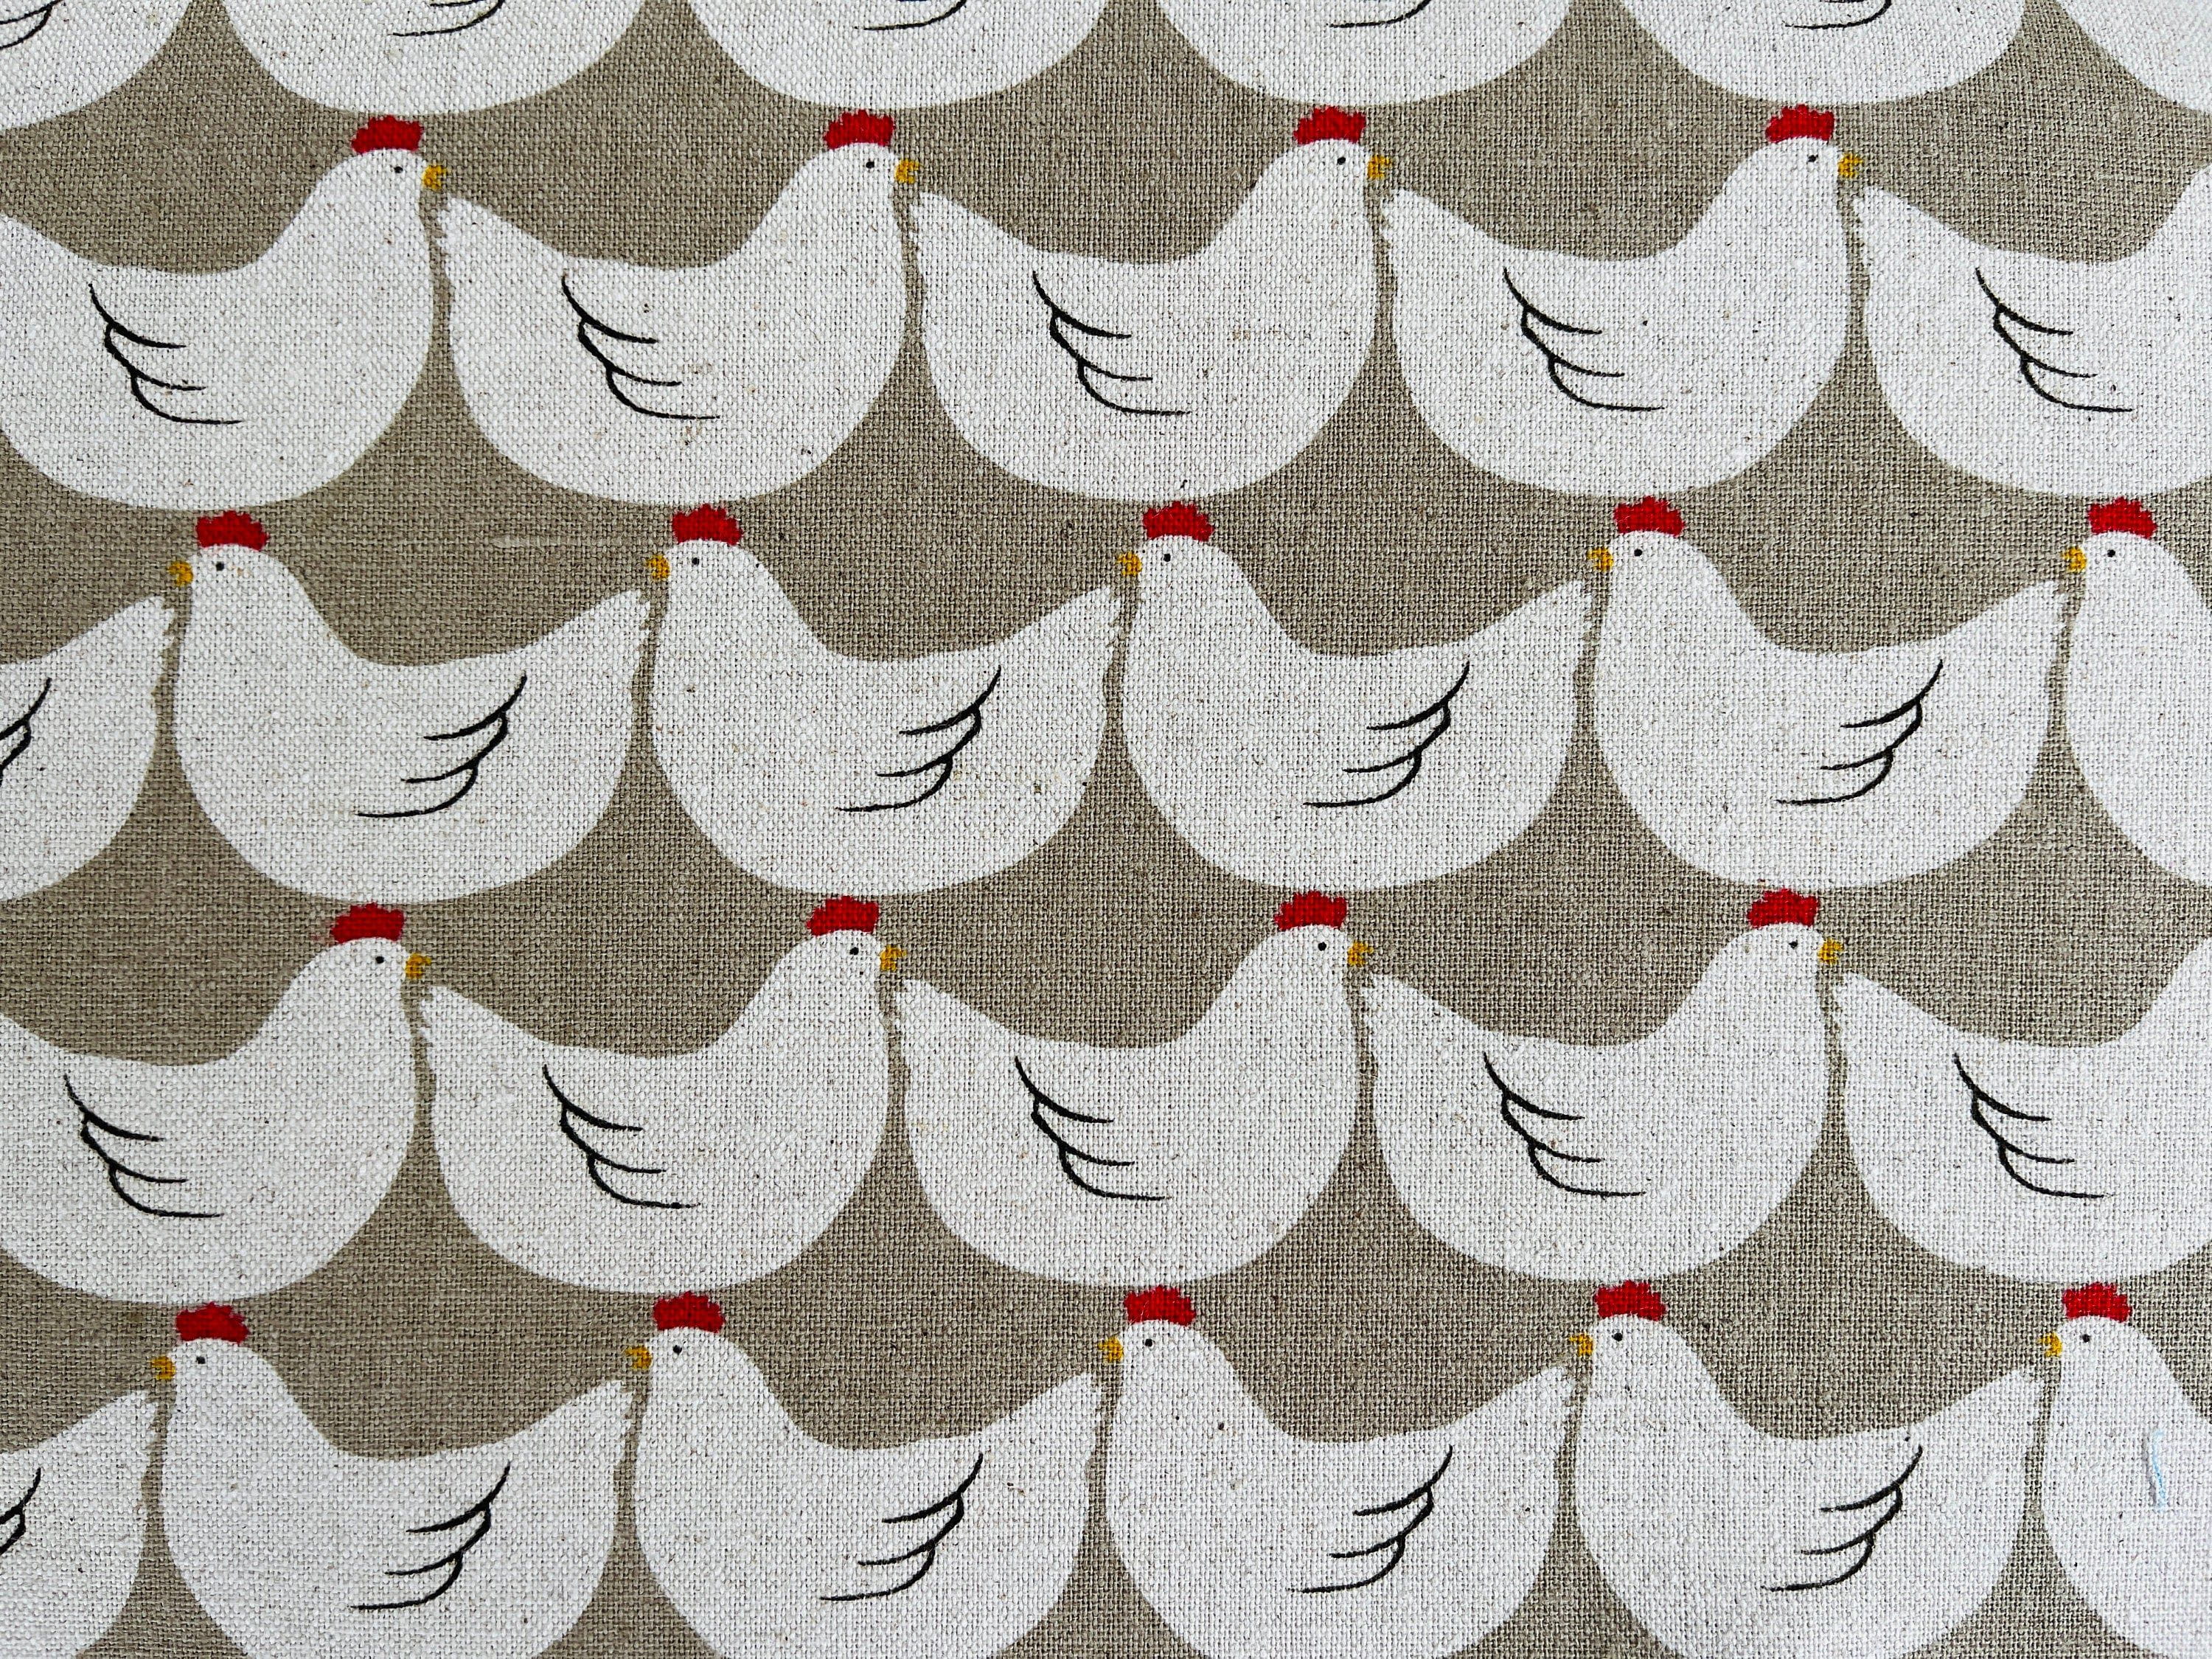 Chicken - Chicken Fabric - Robert Kaufman - Japanese Fabric - Lightweight Canvas Fabric